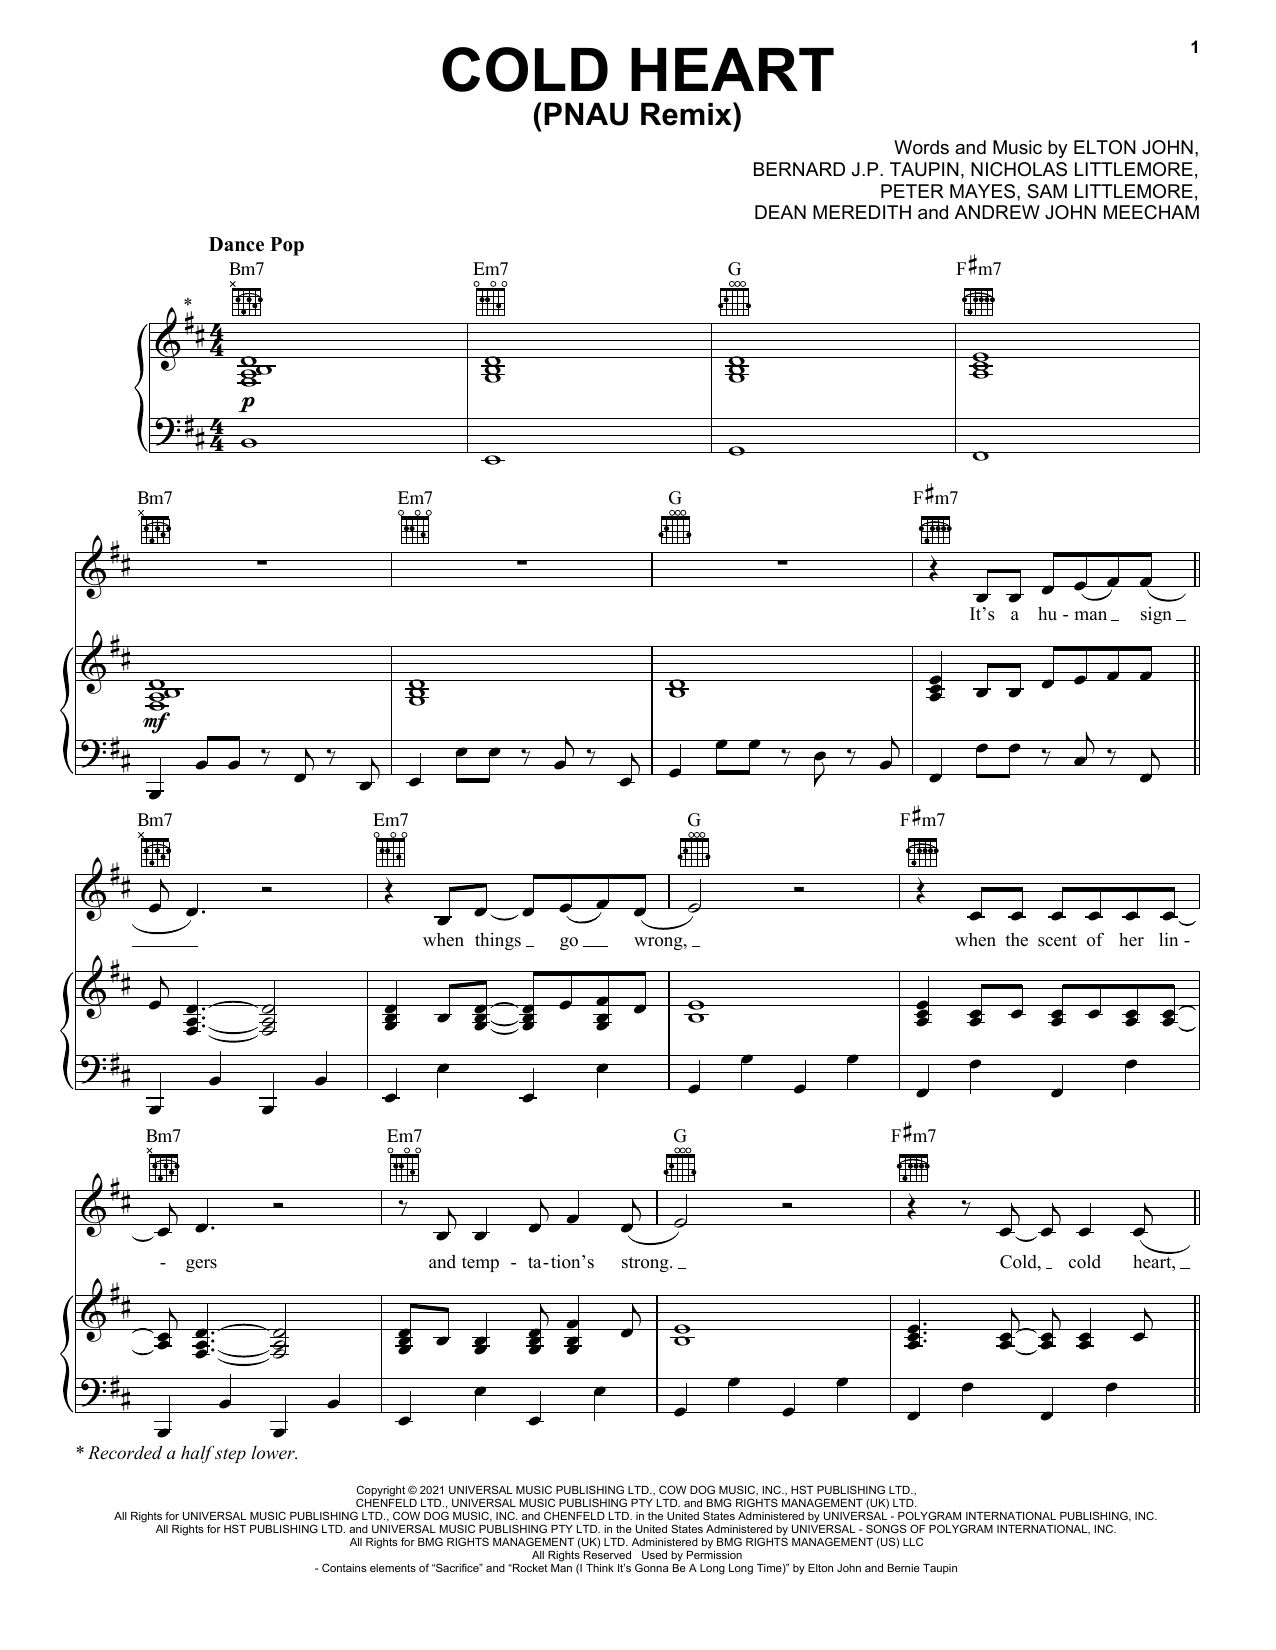 Elton John & Dua Lipa Cold Heart (PNAU Remix) Sheet Music Notes & Chords for Easy Piano - Download or Print PDF